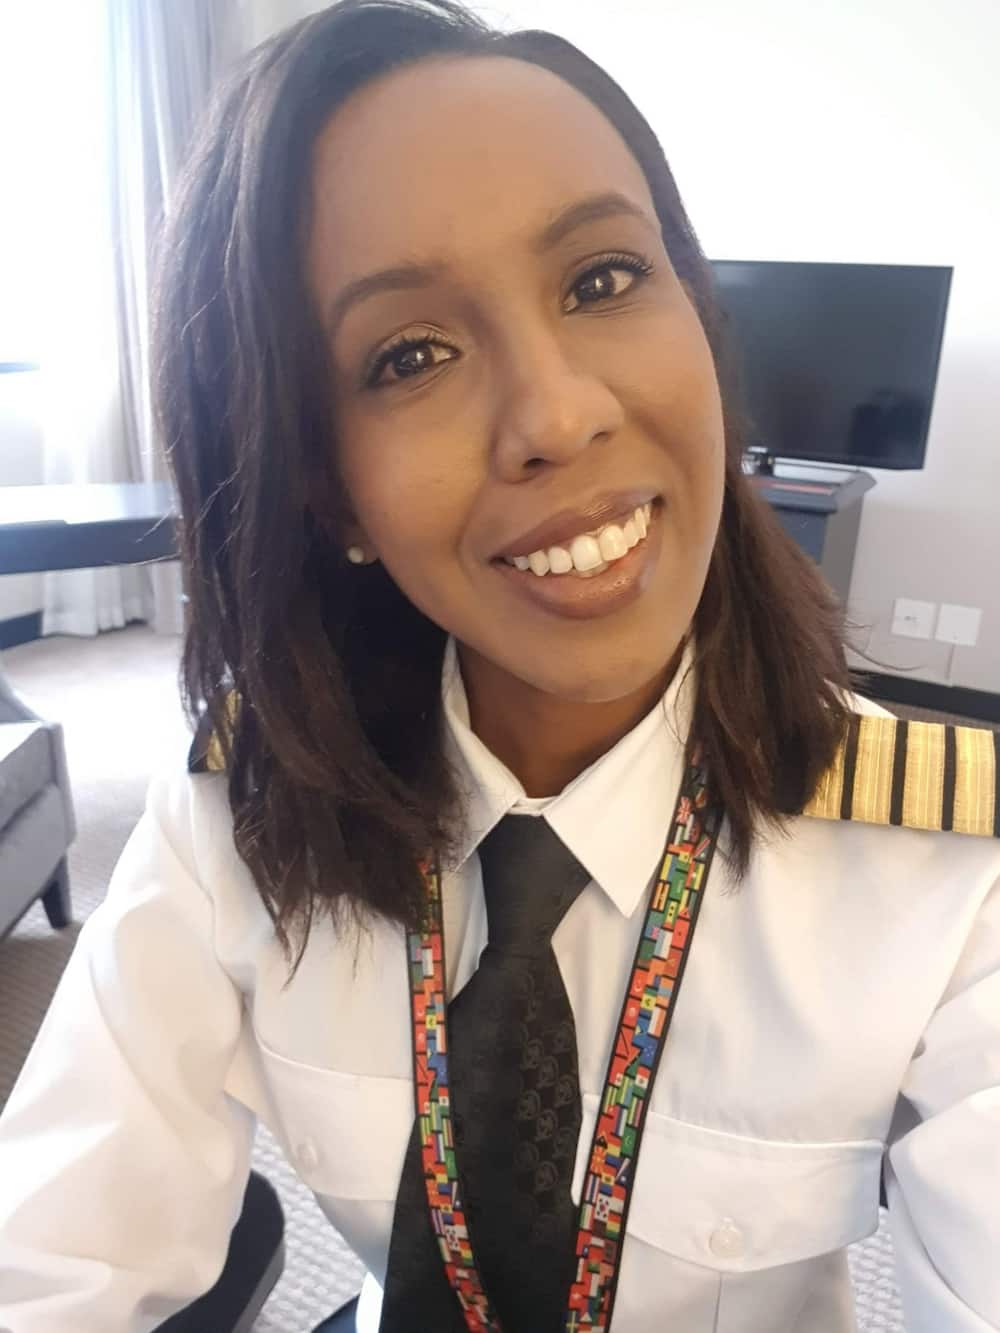 X photos and hobbies of Kenya Airways female pilots: Part 2